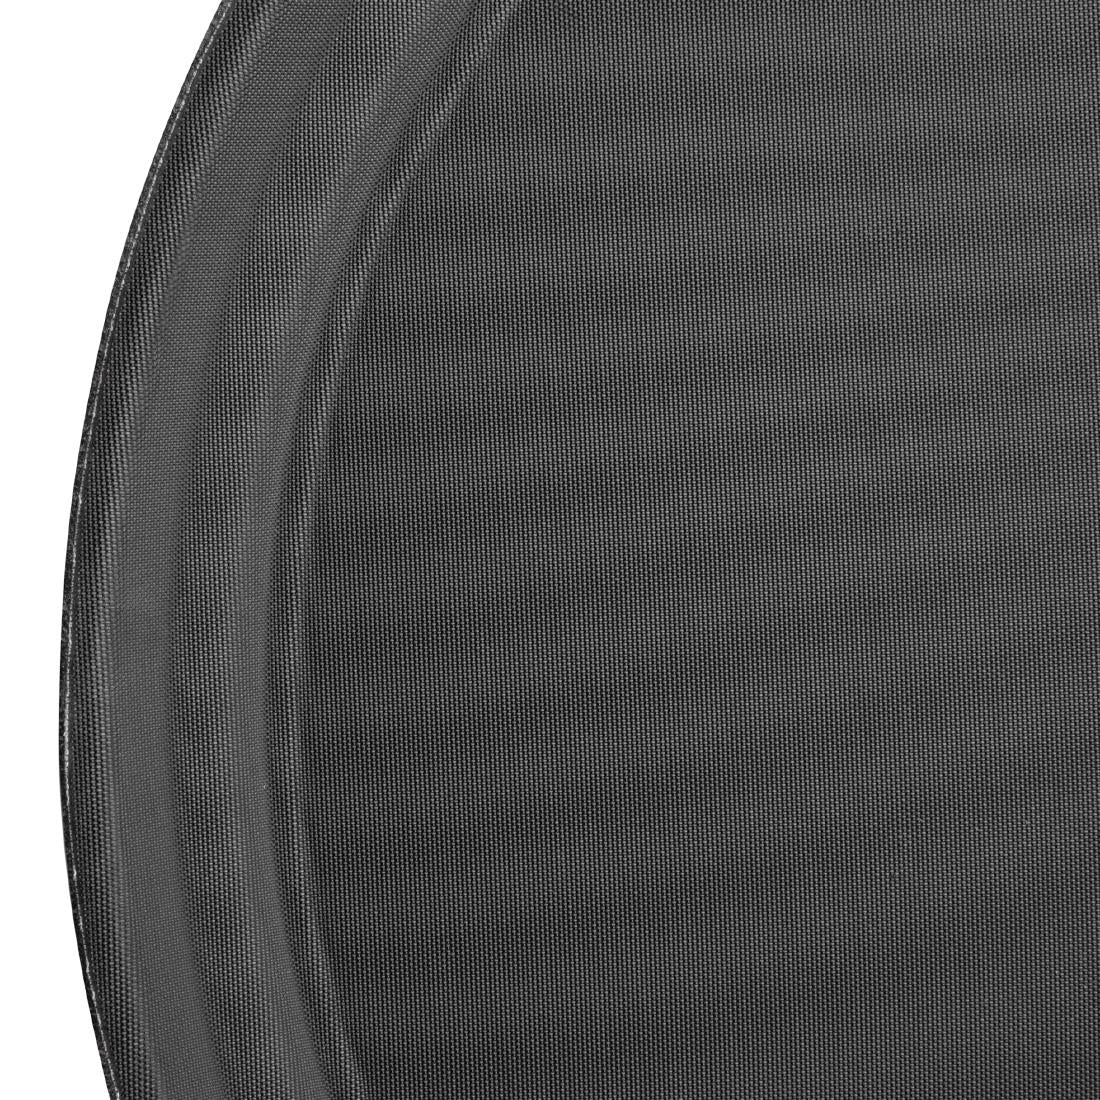 Kristallon Fibreglass Round Non-Slip Tray Black 406mm JD Catering Equipment Solutions Ltd